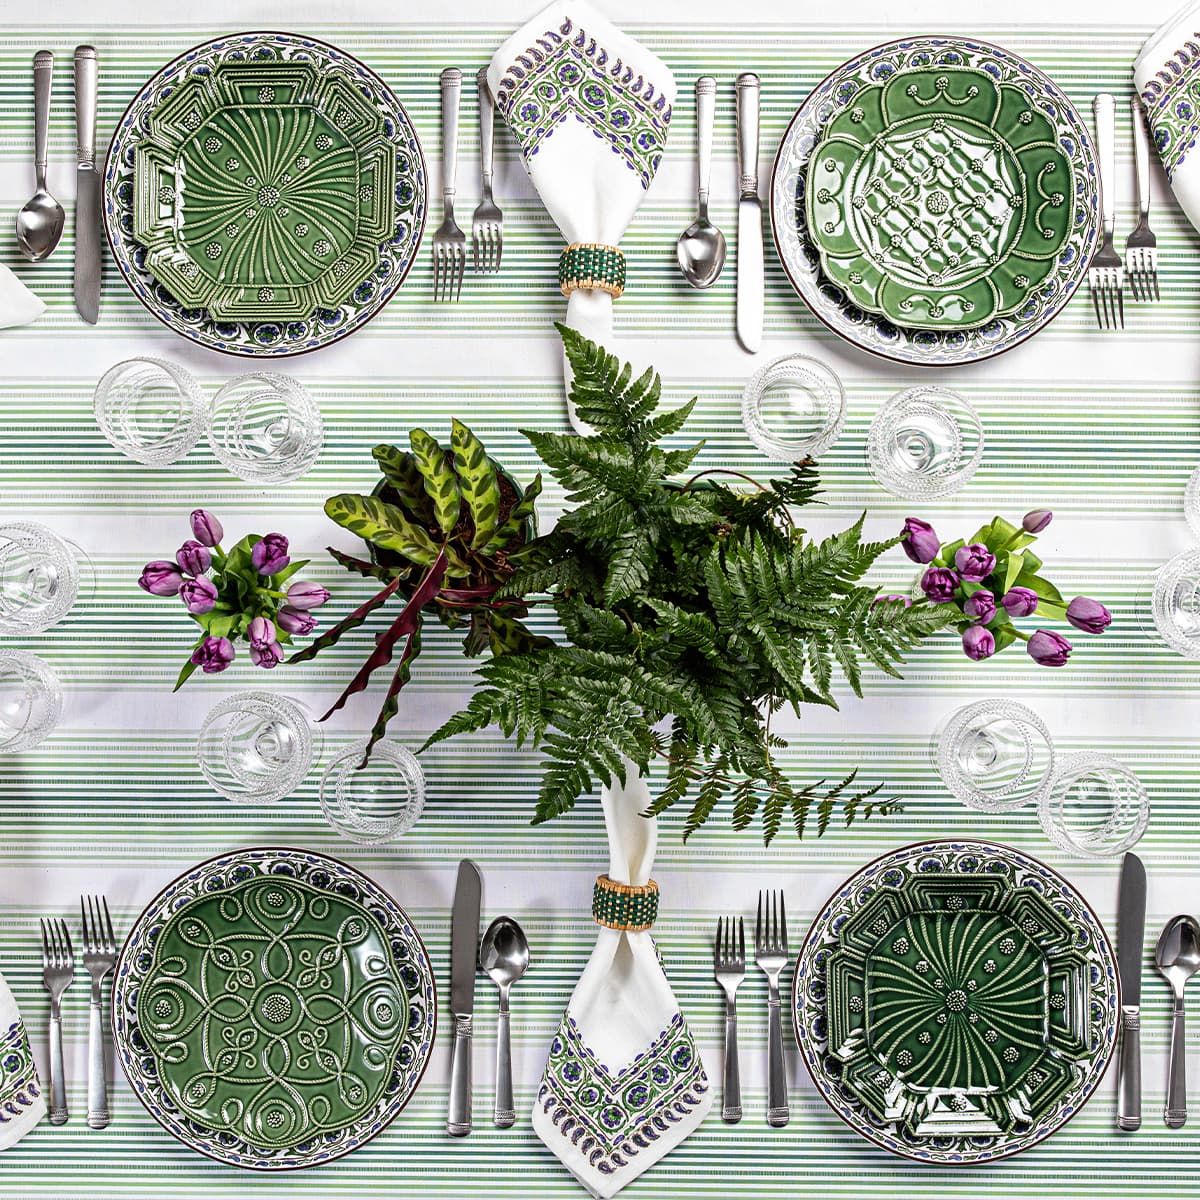 Veronica Beard Jardin du Monde Green plates.